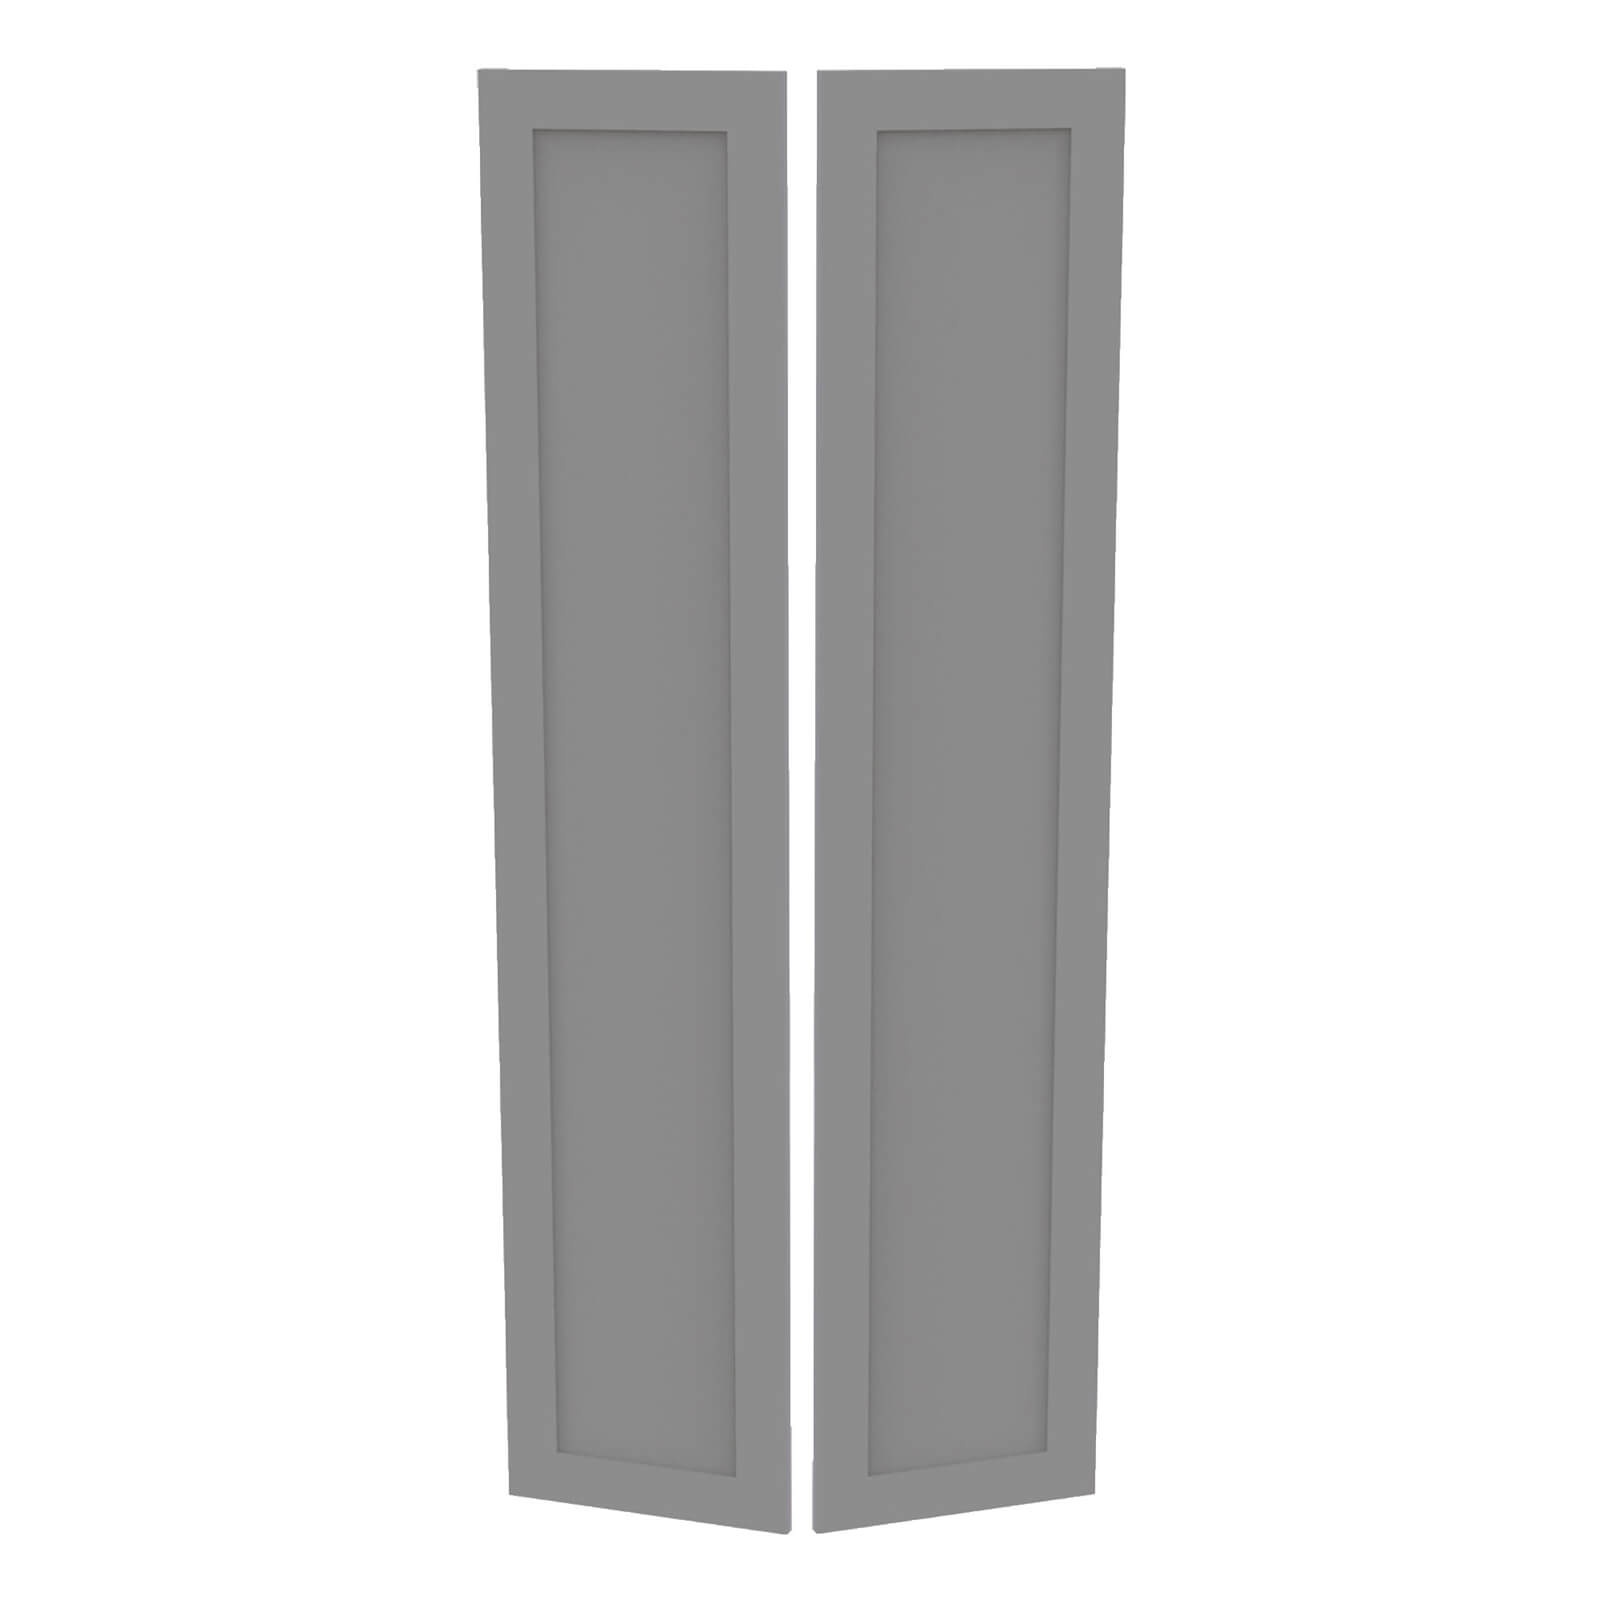 Photo of Fitted Bedroom Shaker Double Wardrobe Doors - Grey